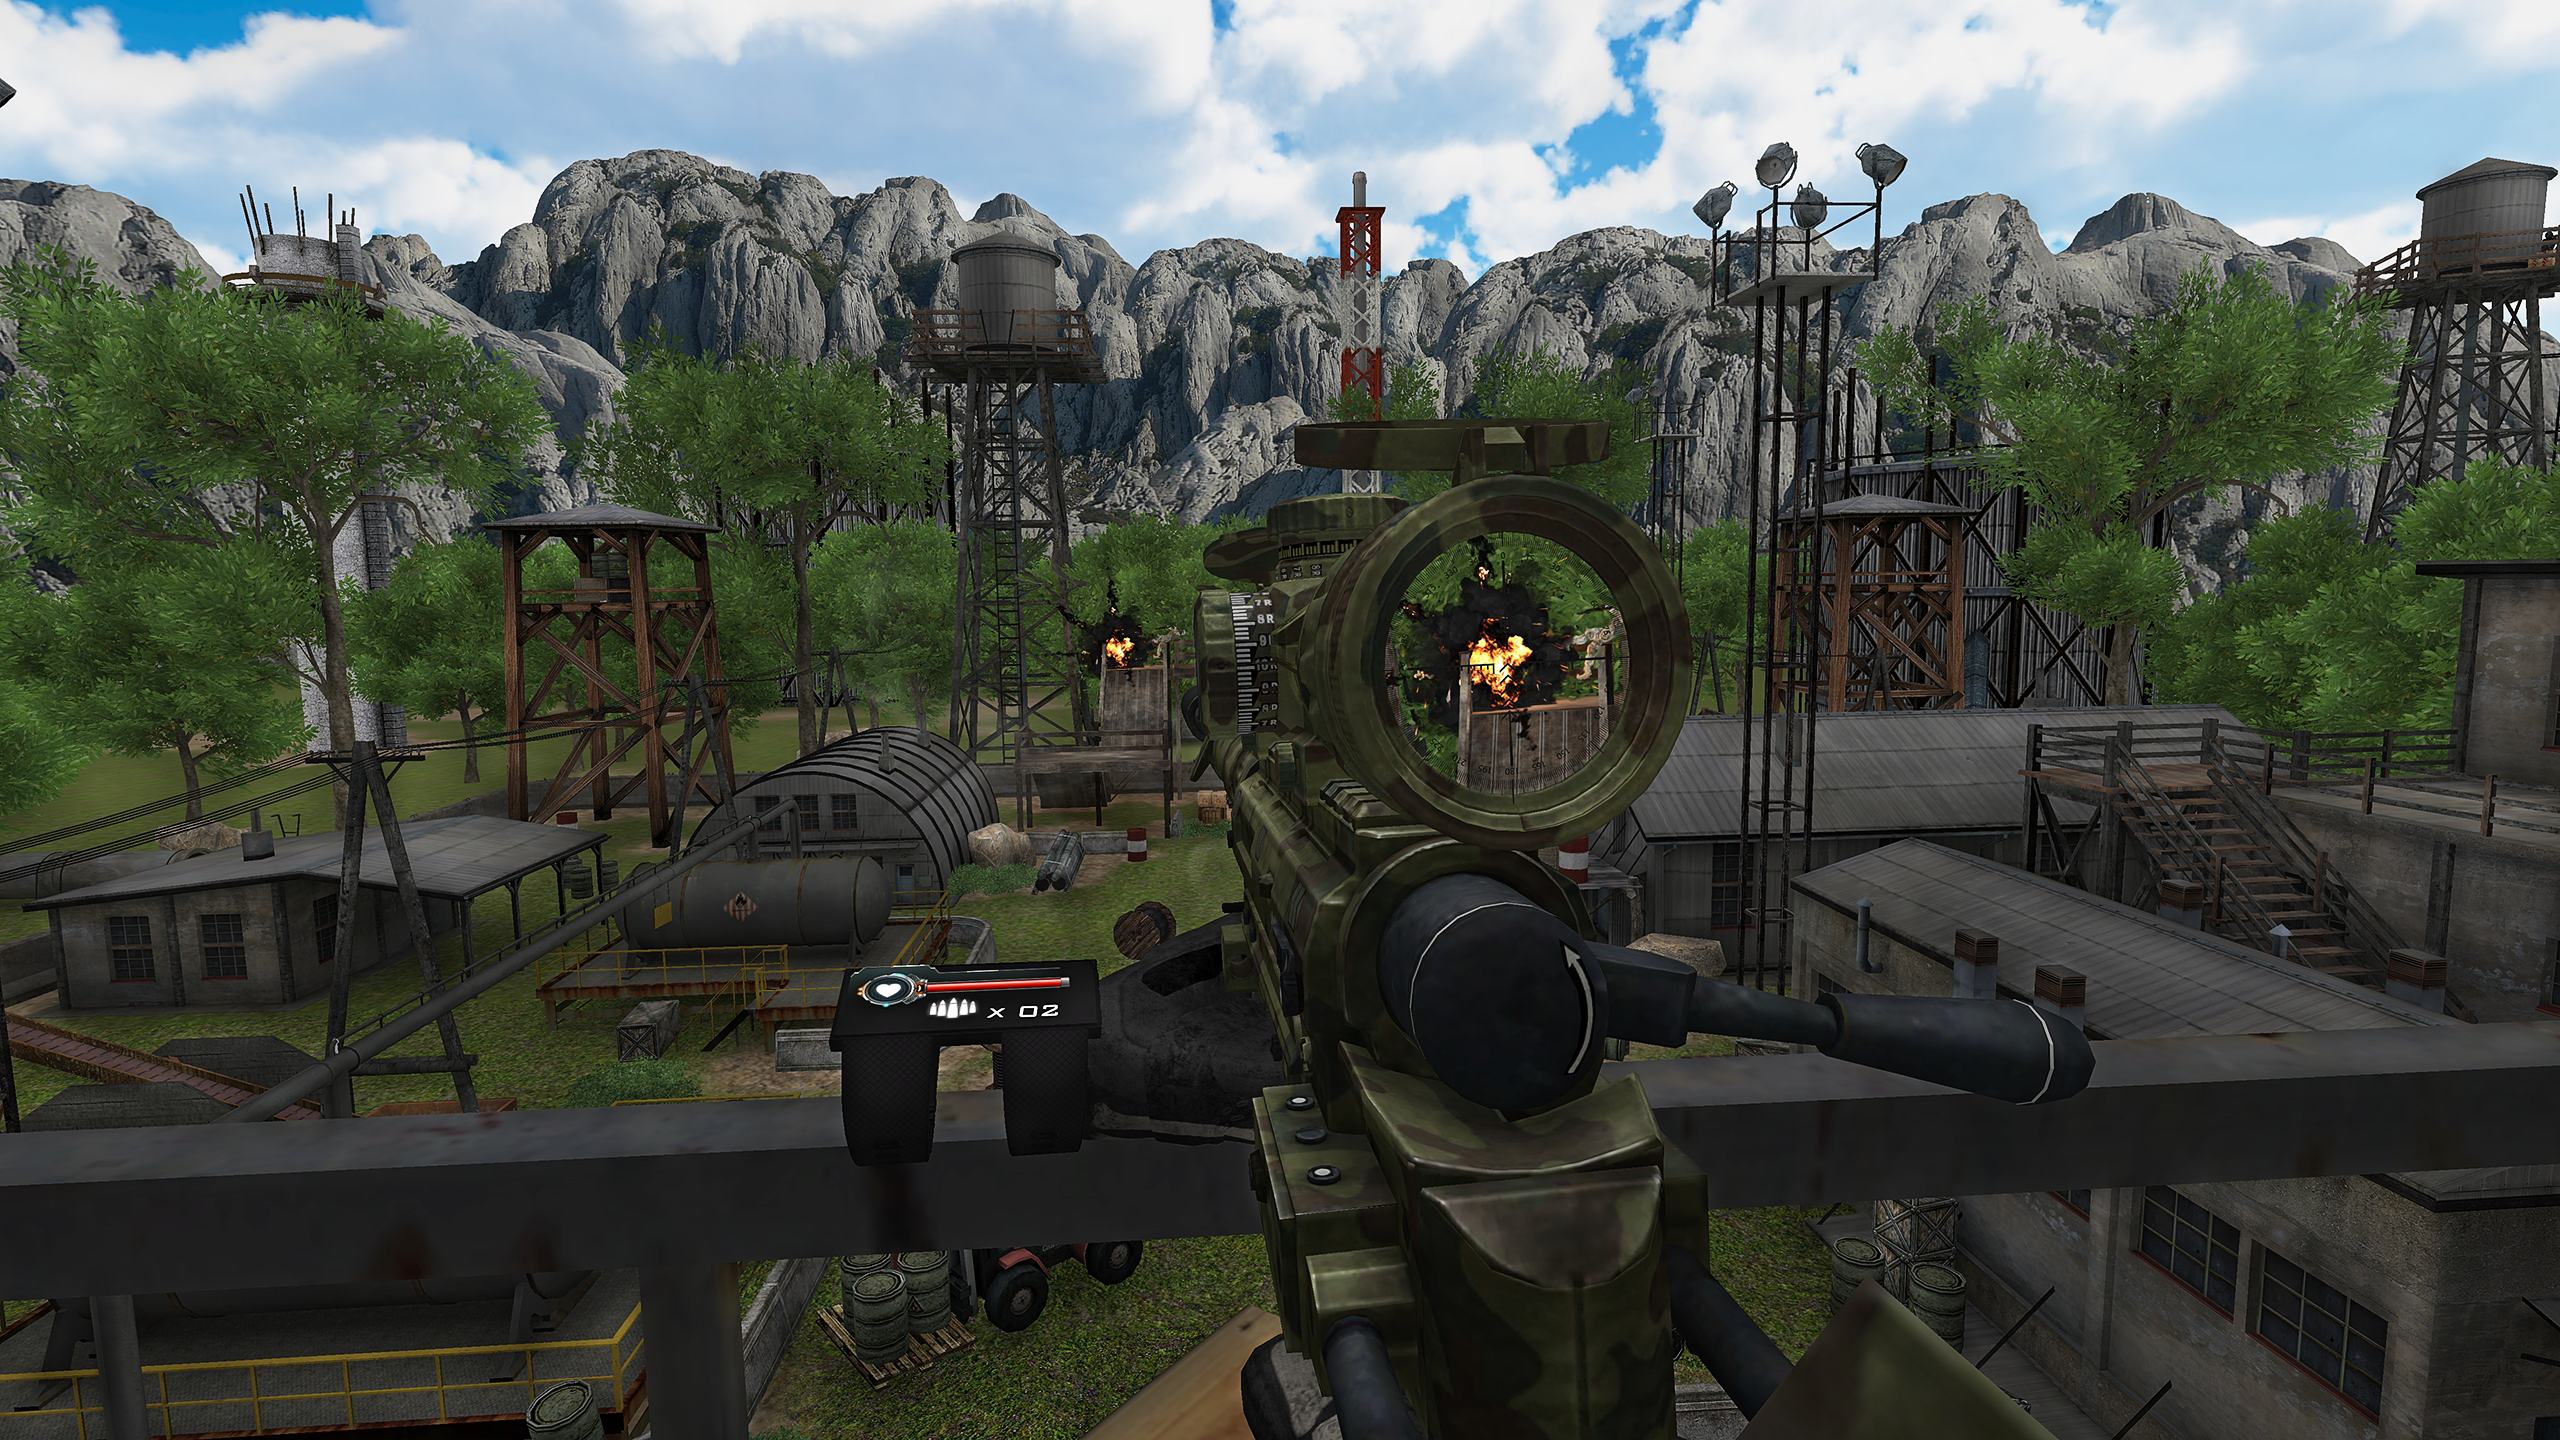 SniperRust VR screenshot 03 - Sniper Rust VR